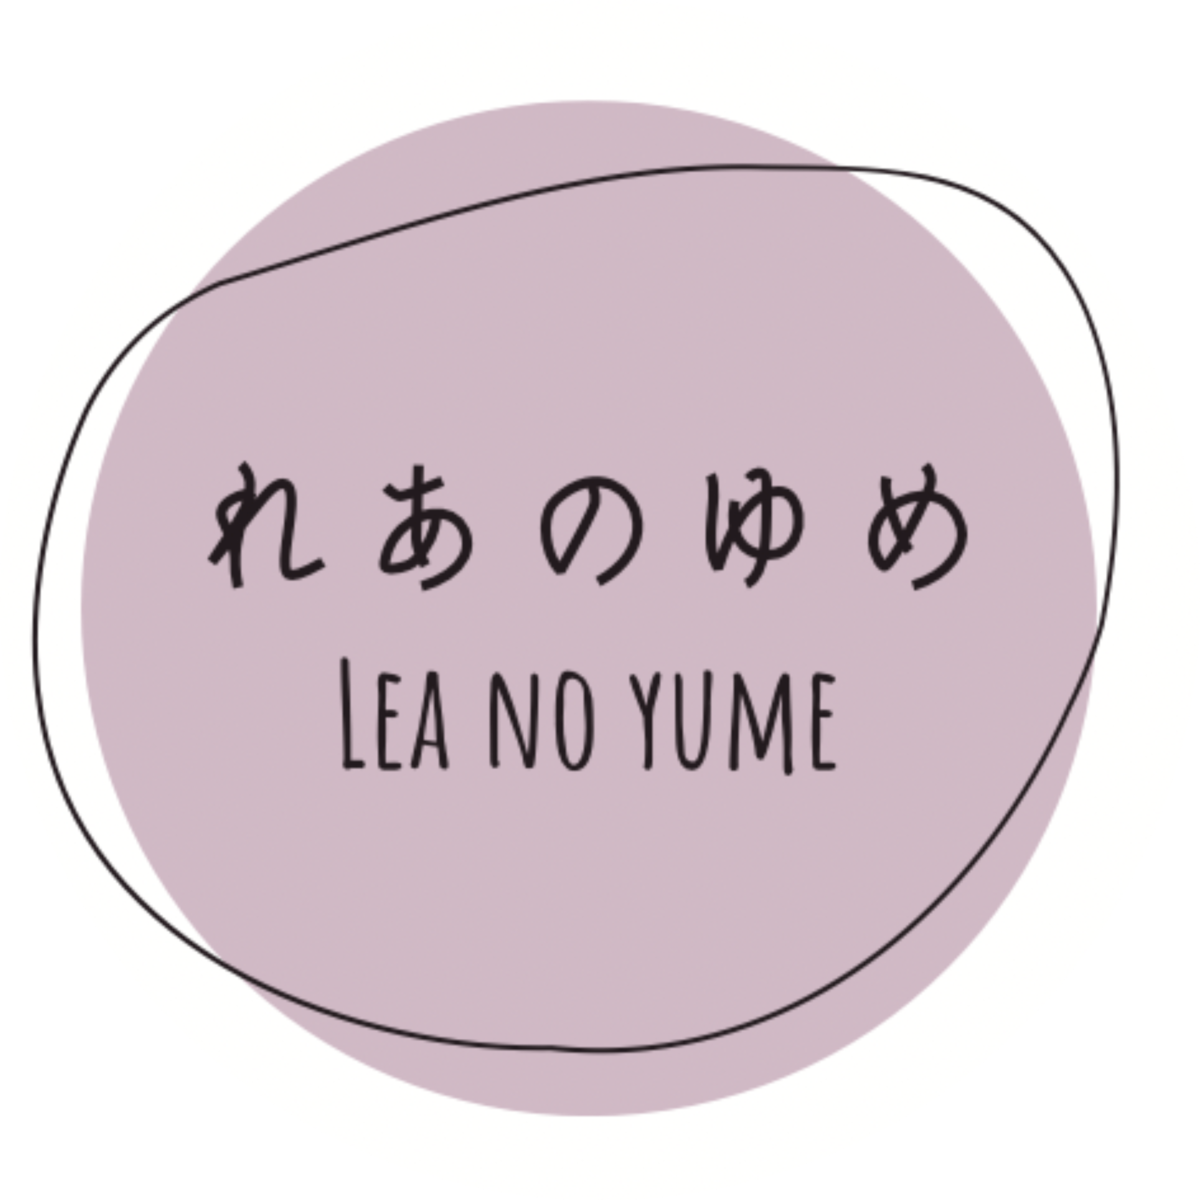 Leanoyume